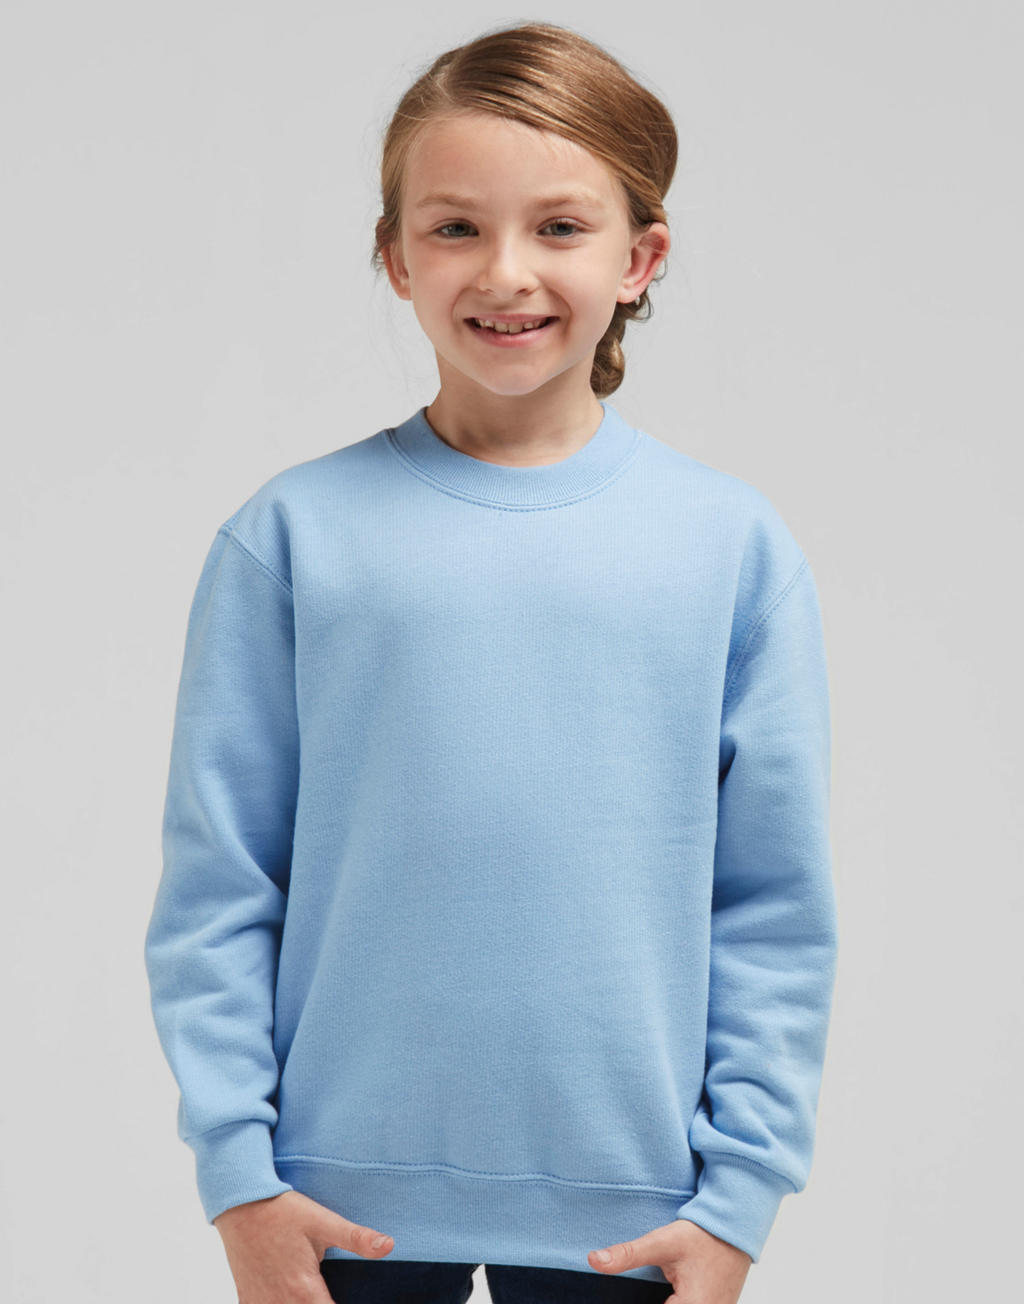 SG Kinder Sweatshirt günstig kaufen | Basic-Shirts